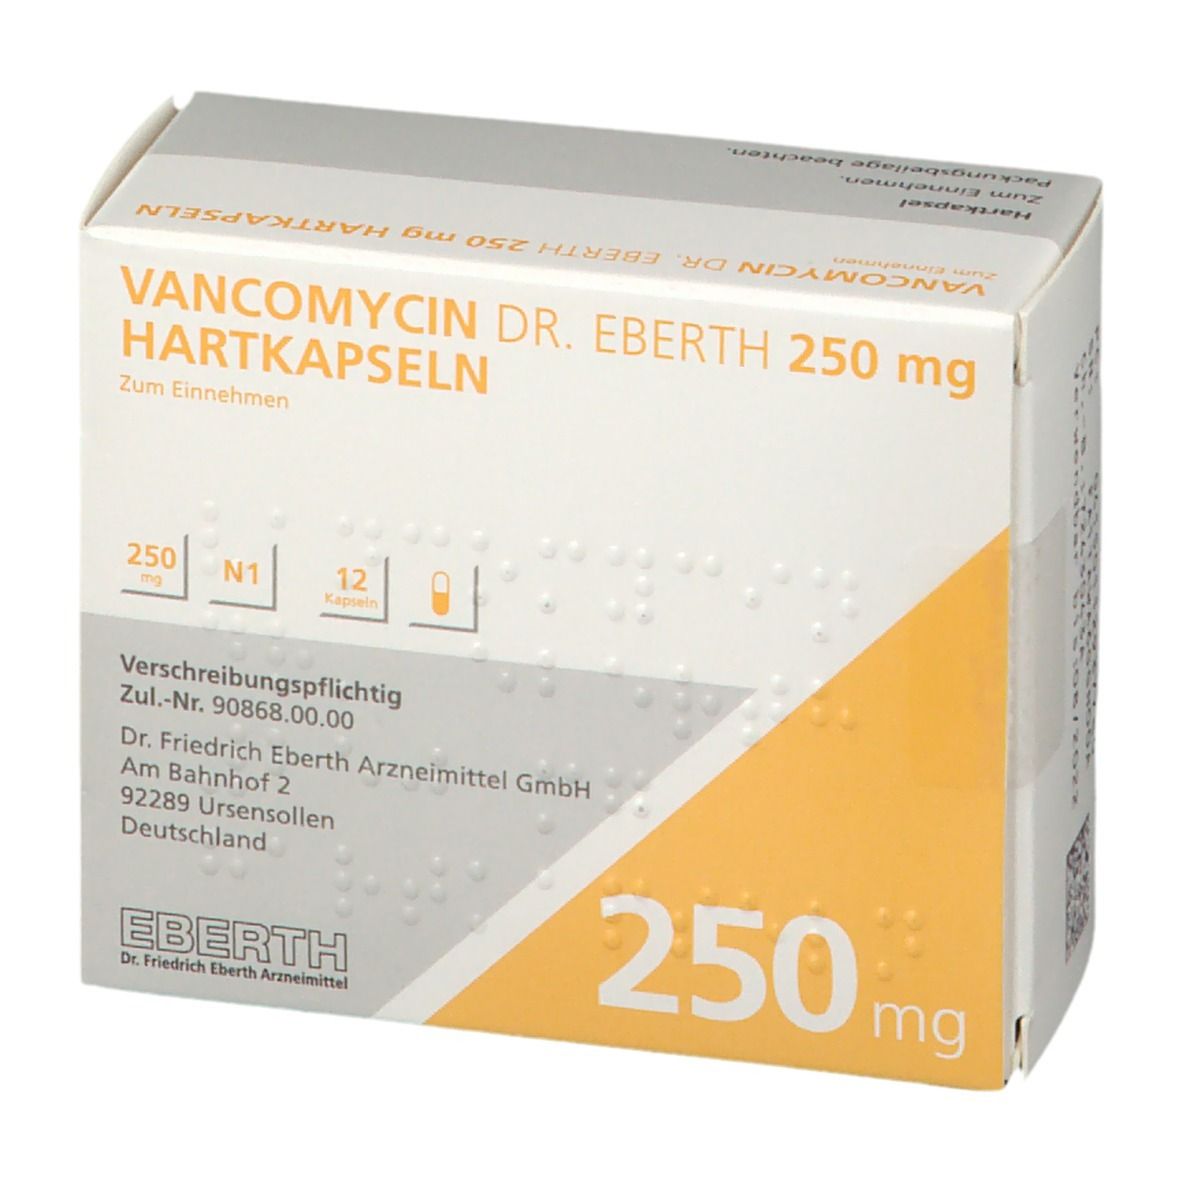 VANCOMYCIN DR. EBERTH 250 mg